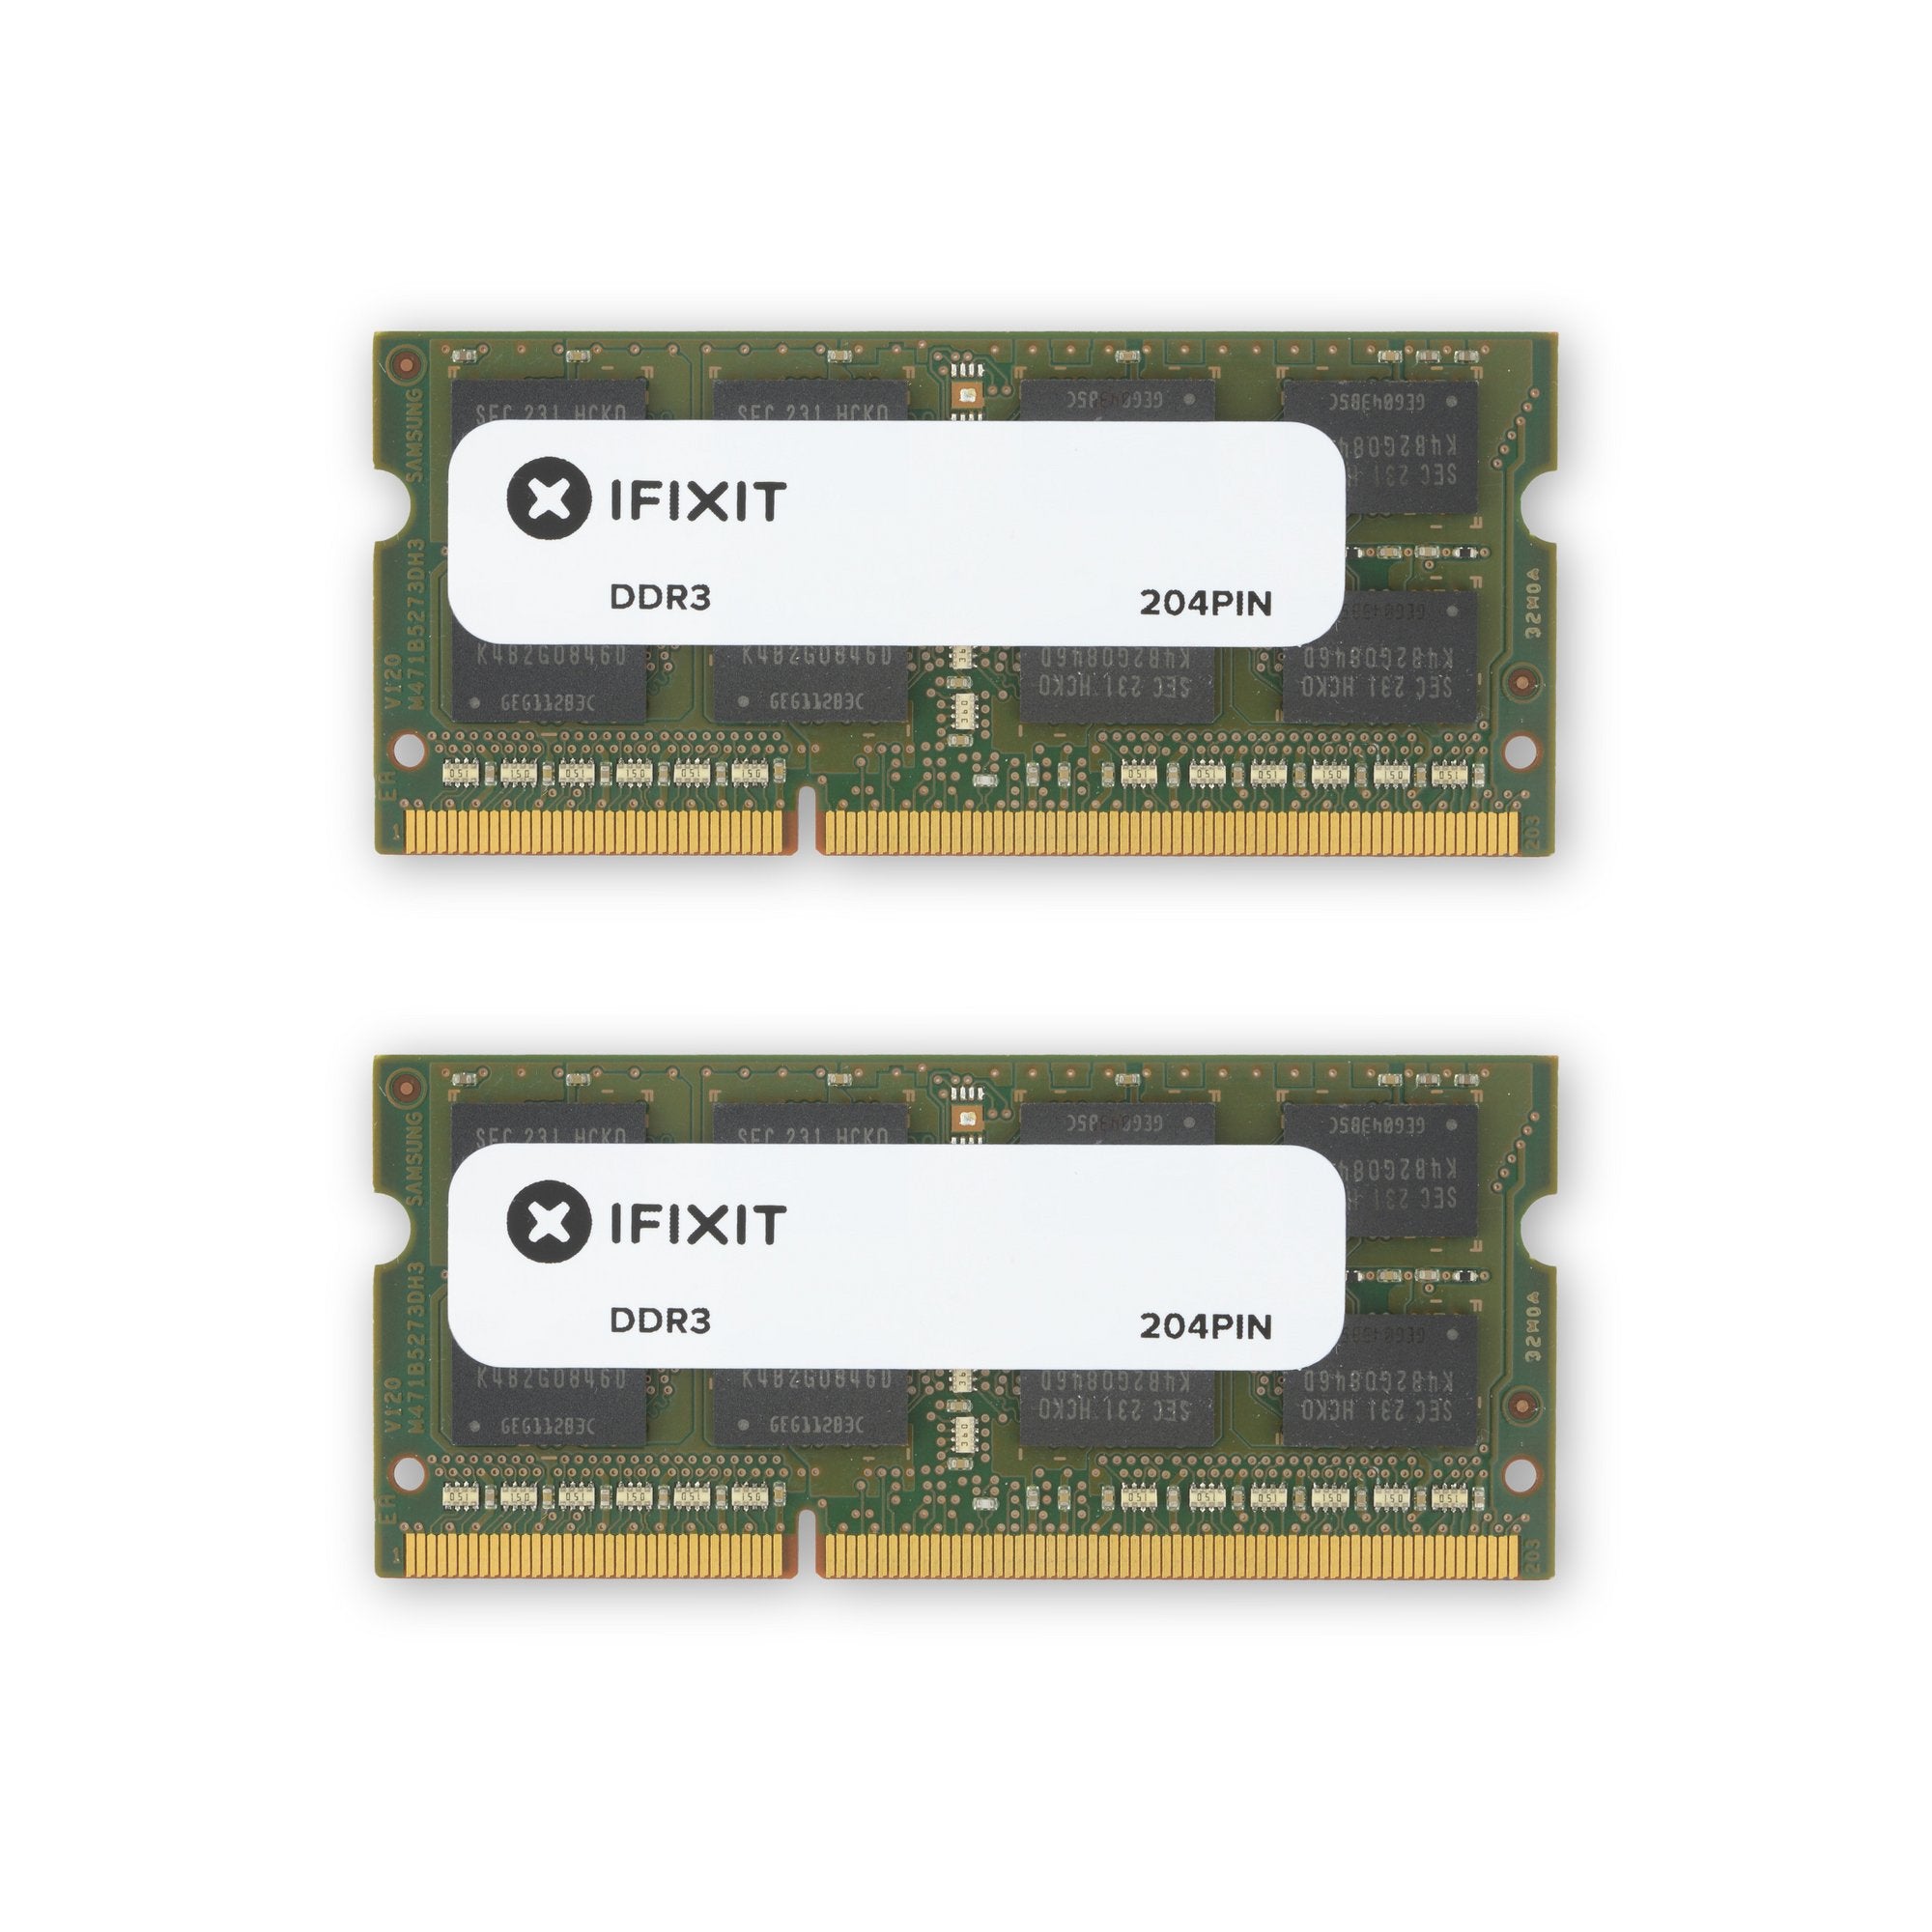 Mac mini A1347 (Ende 2012) Memory Maxxer RAM Upgrade Kit